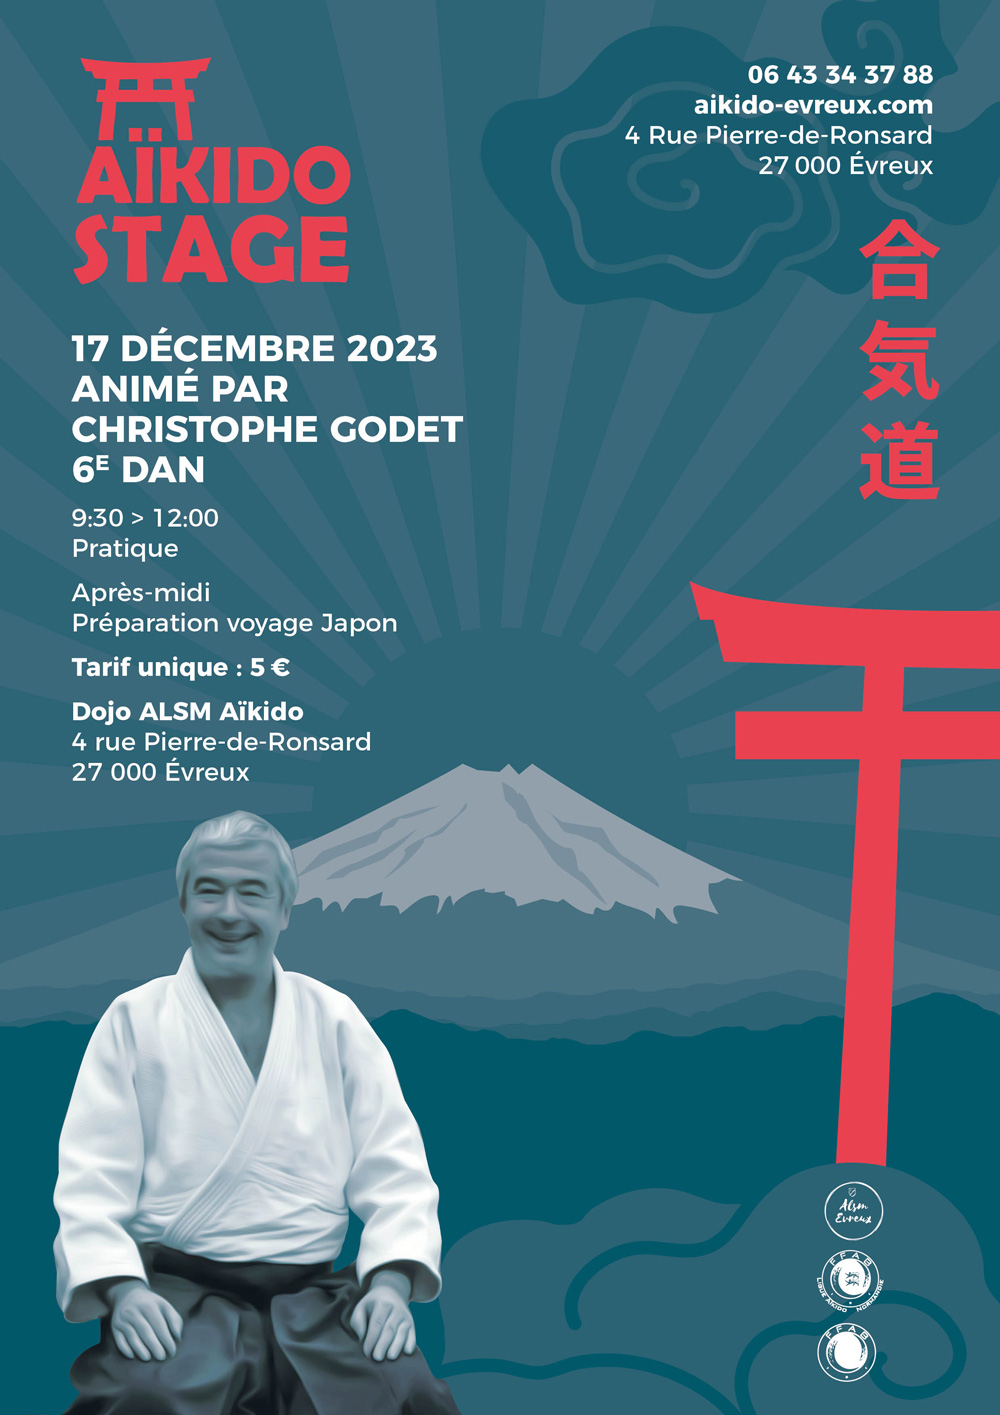 Aikido-stage-preparation-Voyage-Japon-decembre-2023-Christophe-Godet-6e-dan